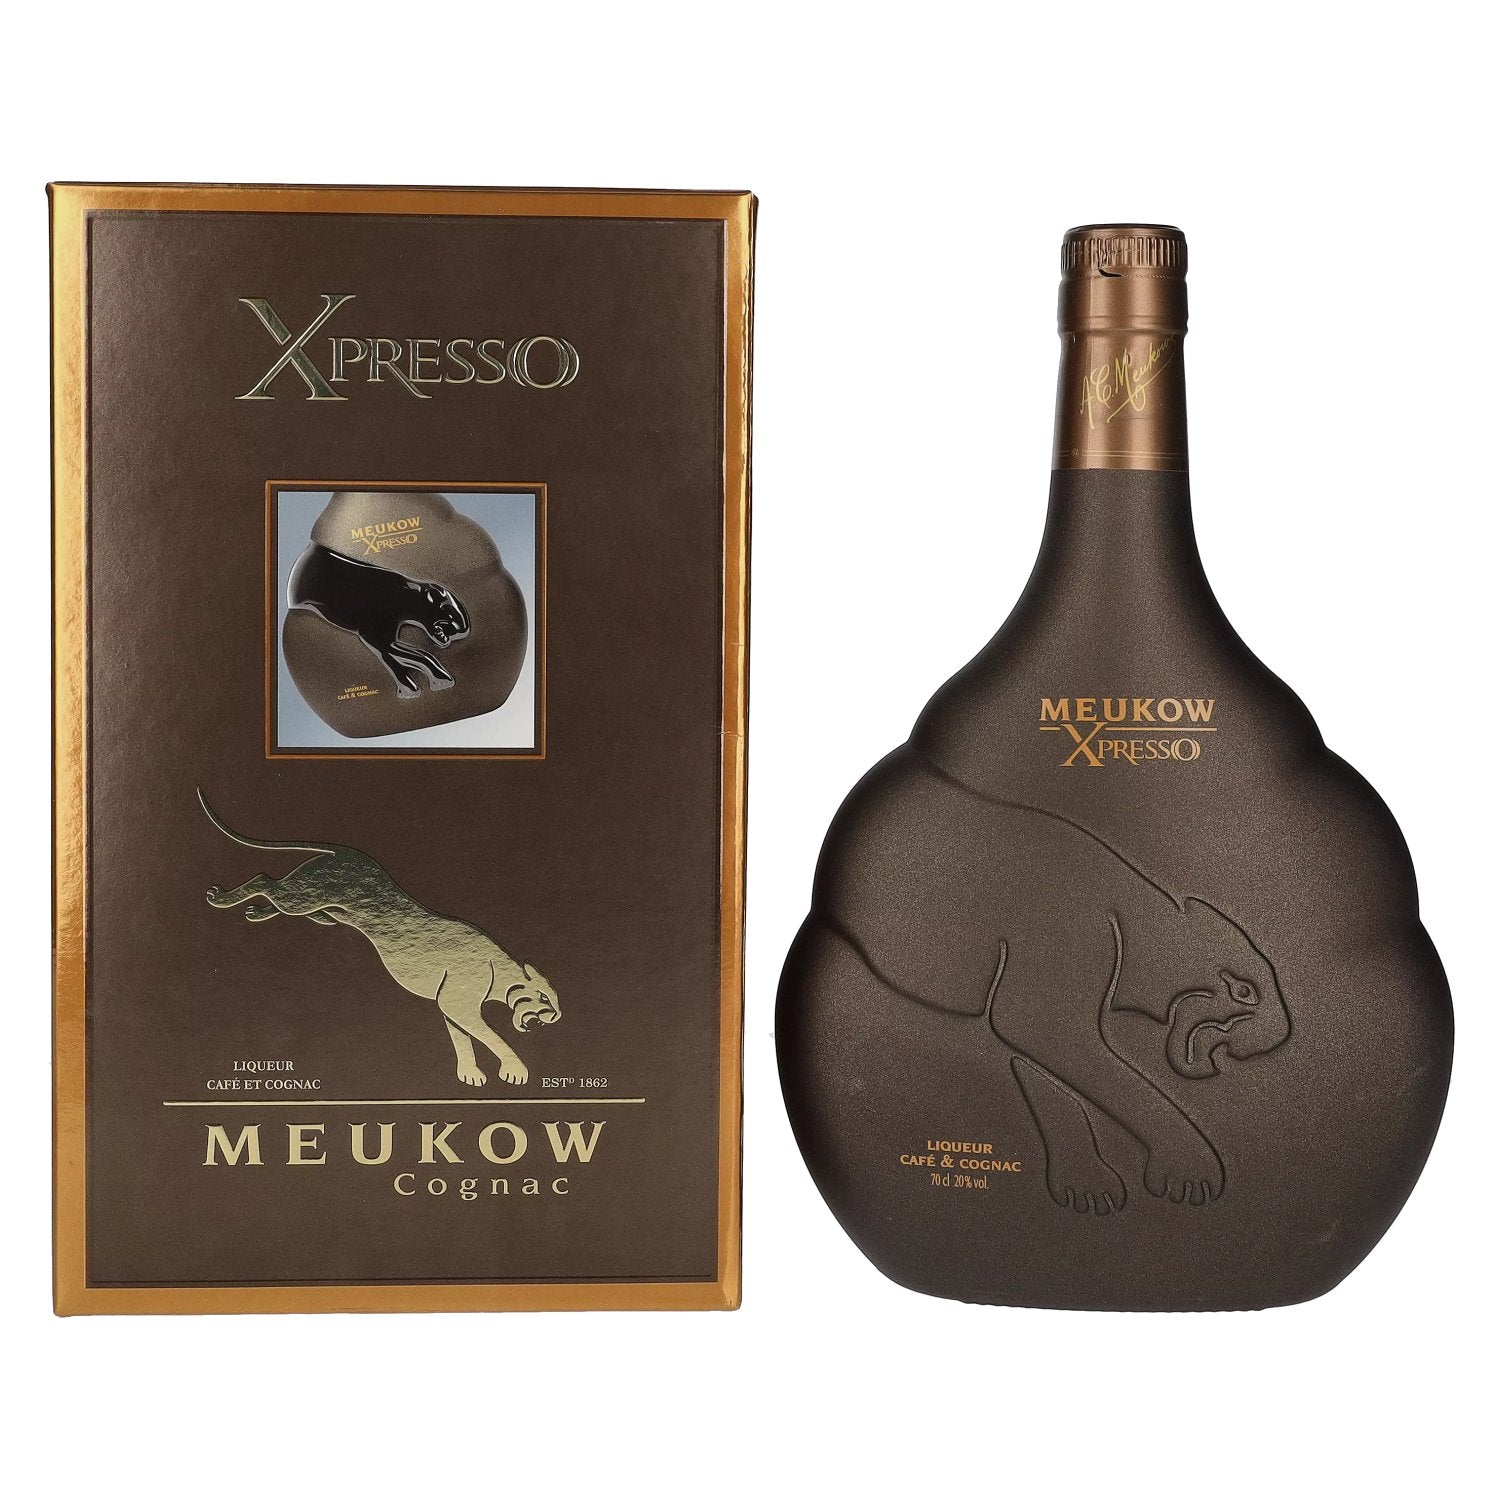 Meukow Xpresso Cafe & Cognac Liqueur 20% Vol. 0,7l in Giftbox